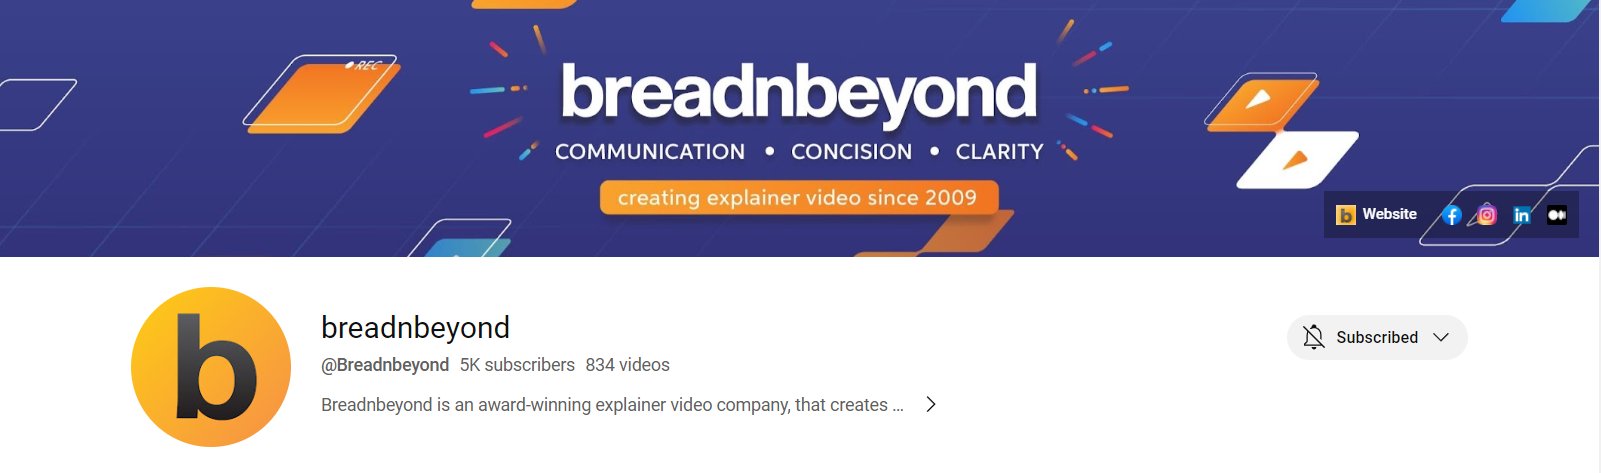 Banner YouTube Breadnbeyond